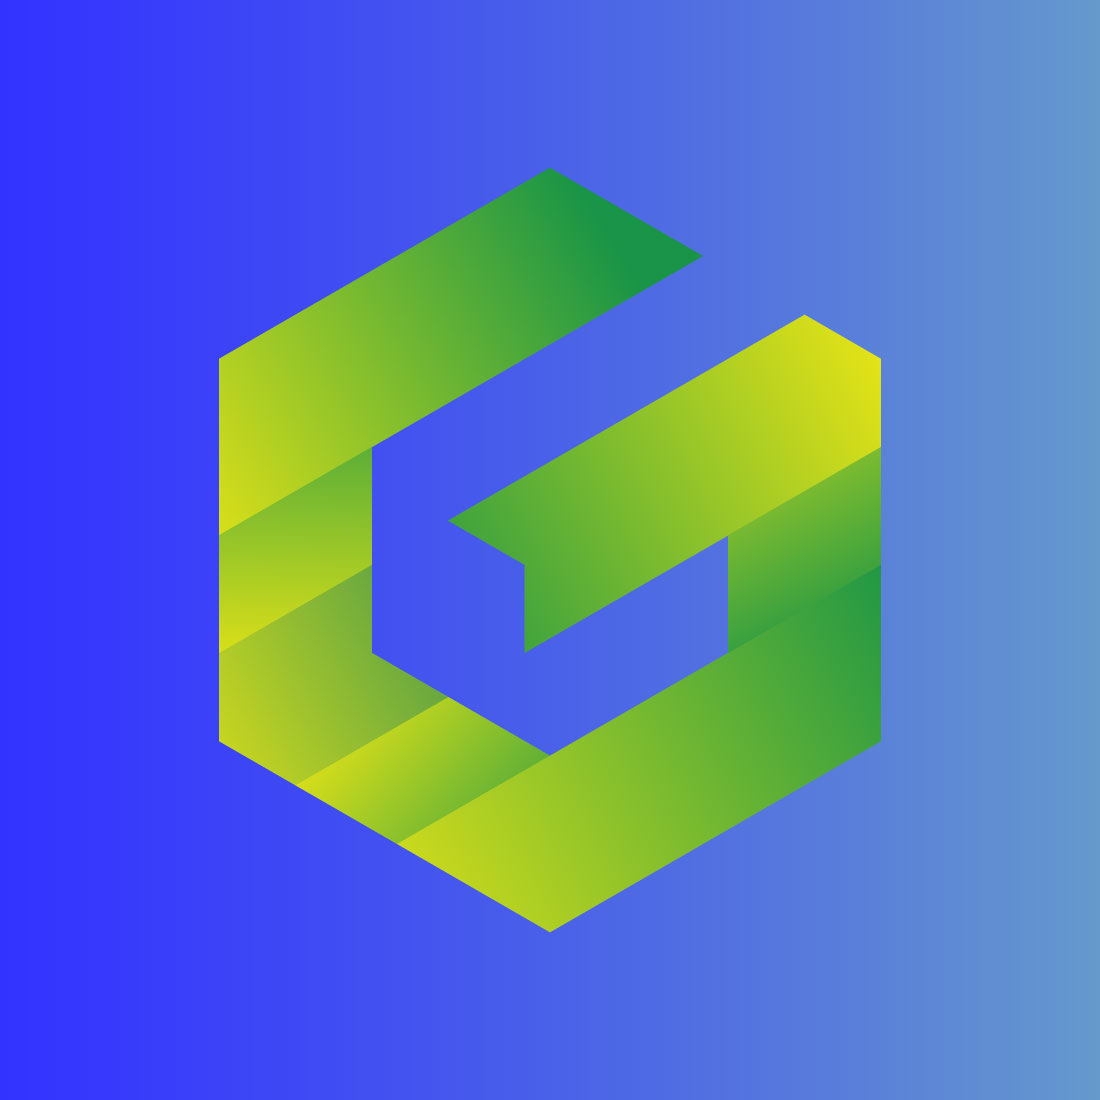 Letter G Logo - Polygon cover image.